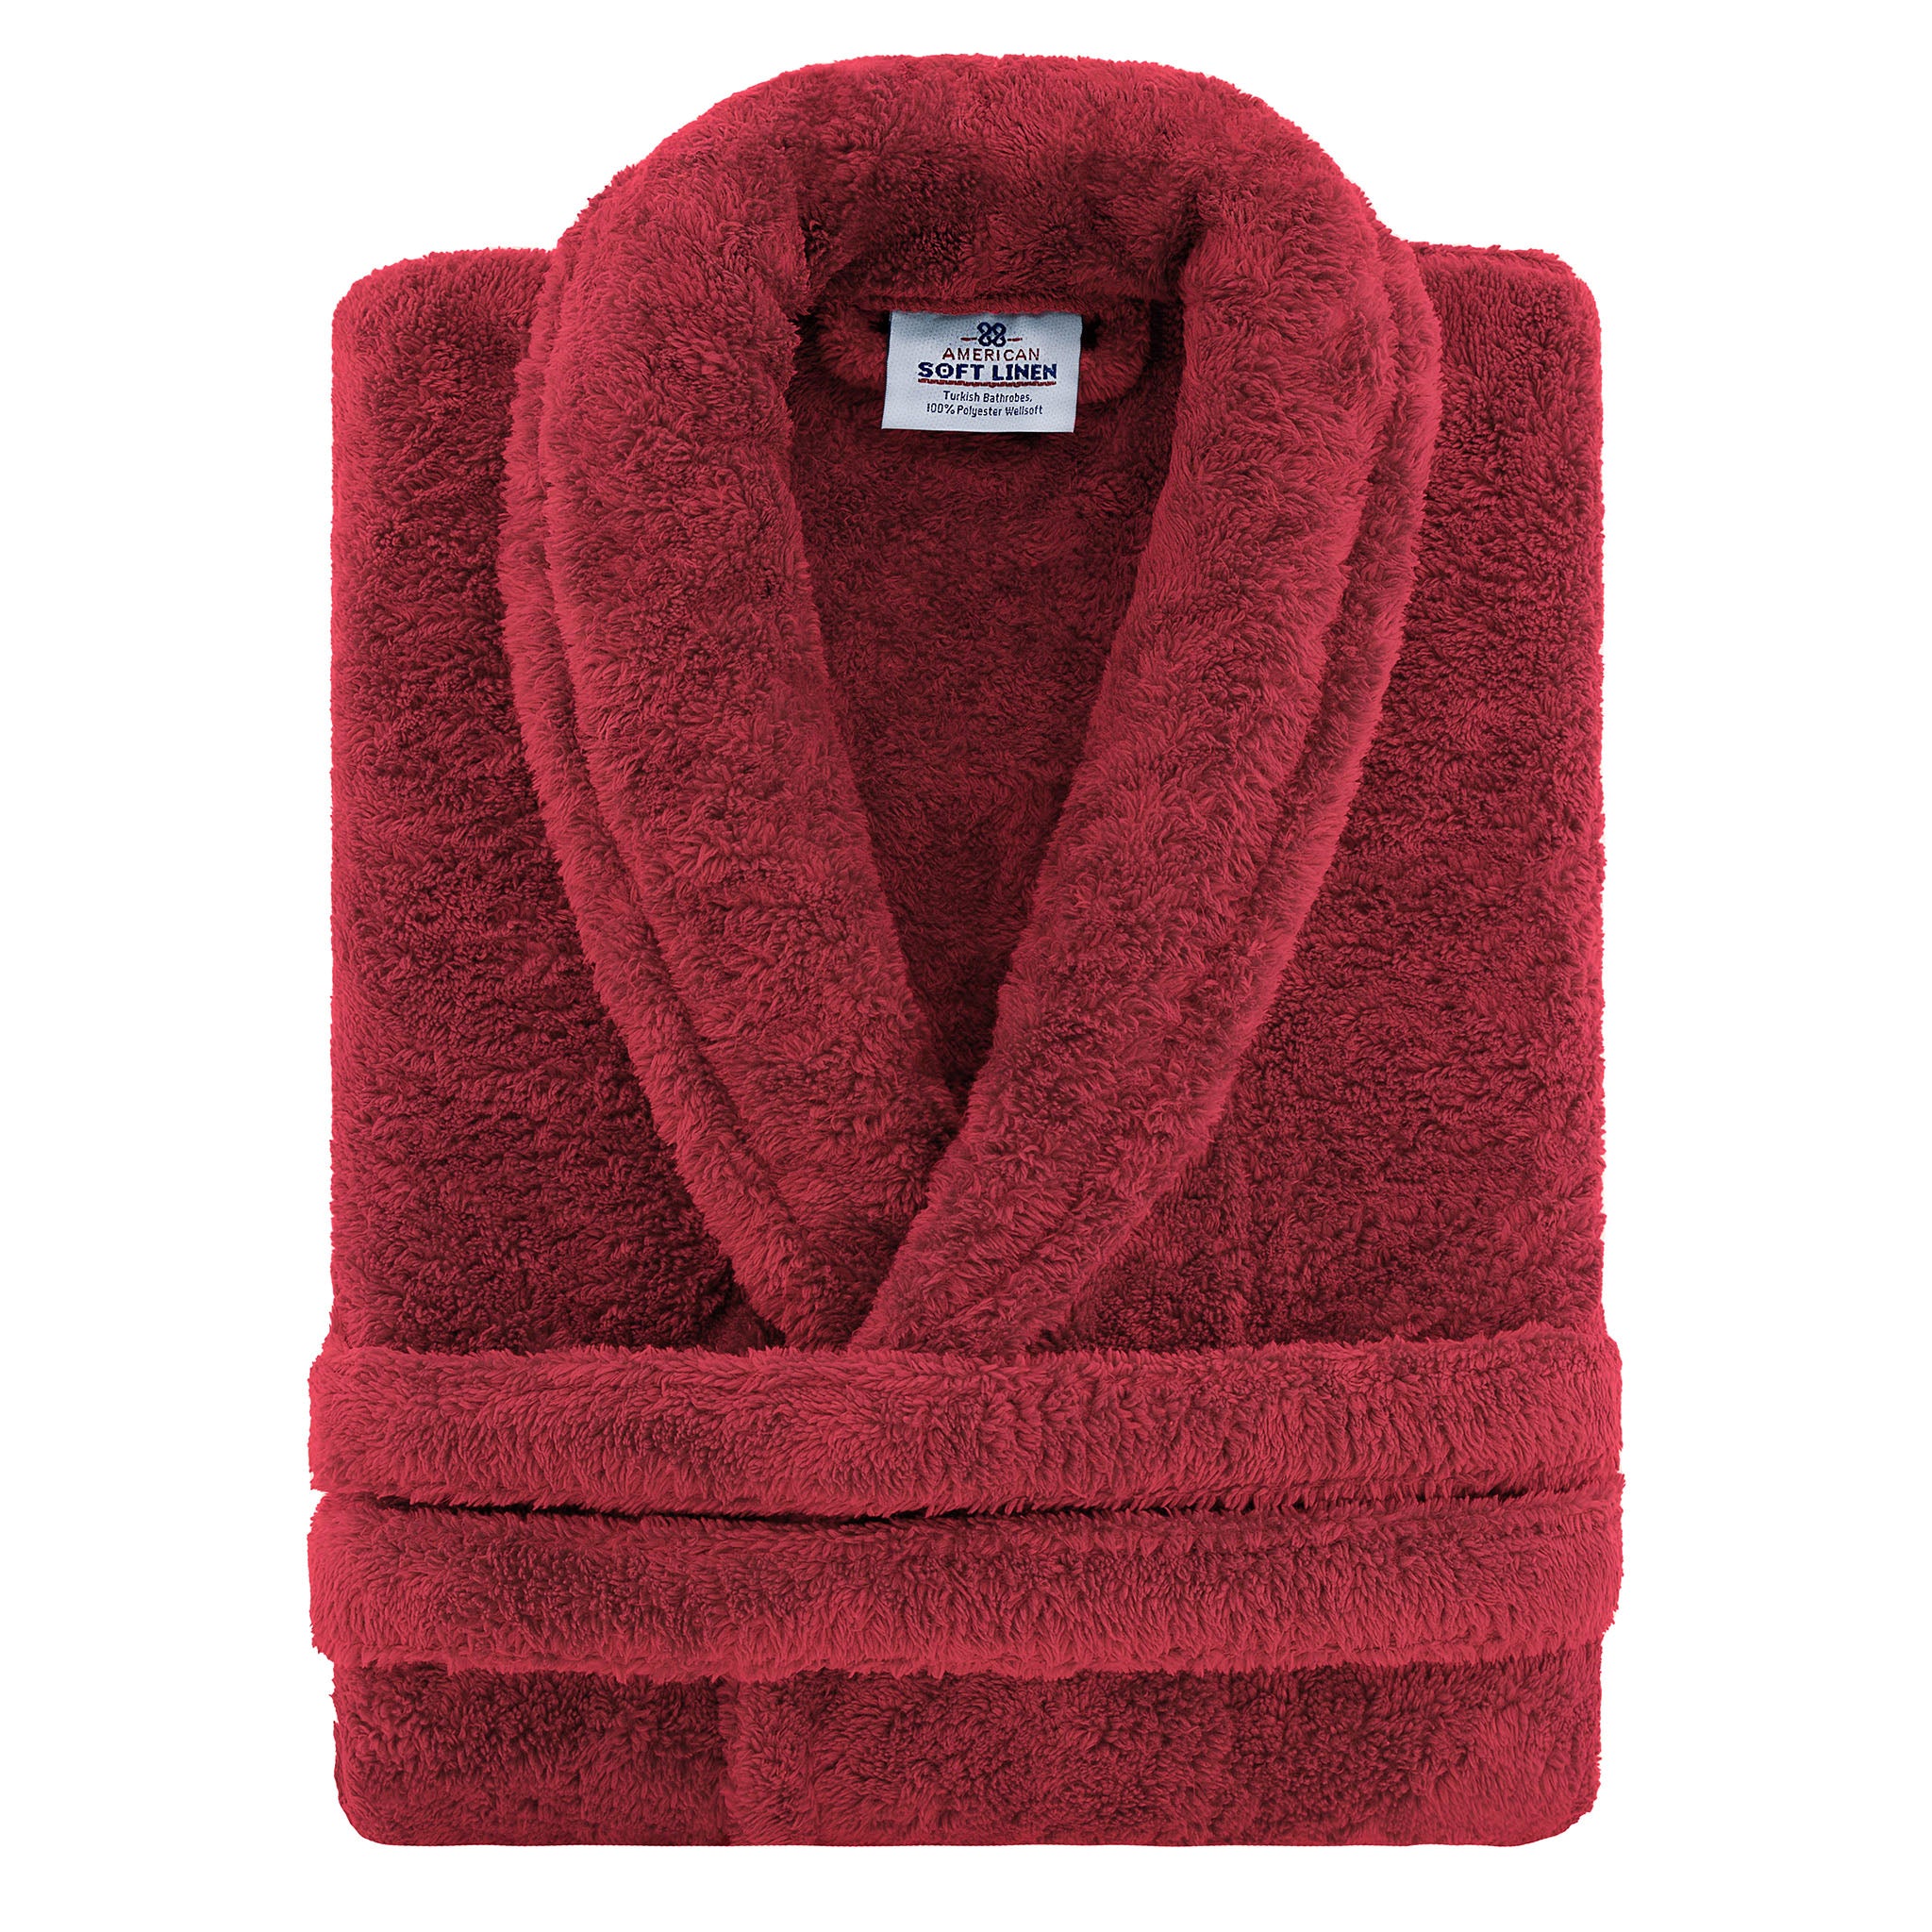 American Soft Linen Super Soft Absorbent and Fluffy Unisex Fleece Bathrobe -12 Set Case Pack -M-L-Bordeaux-red-3